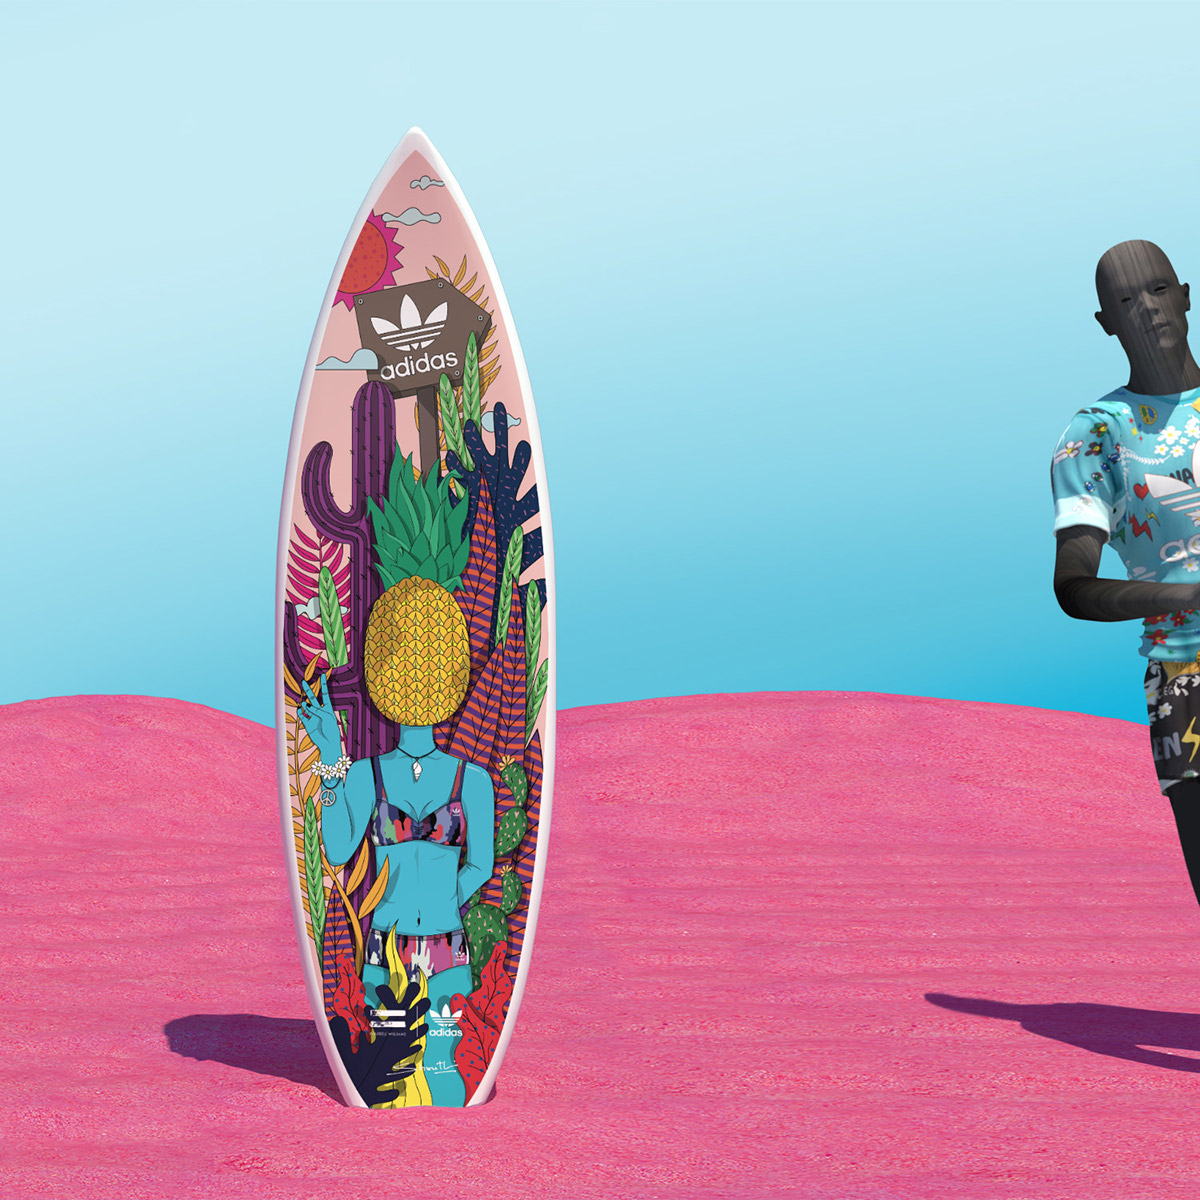 adidas adidas originals pharrell williams Pharrell pink beach branding  launch vr Virtual reality 360 video